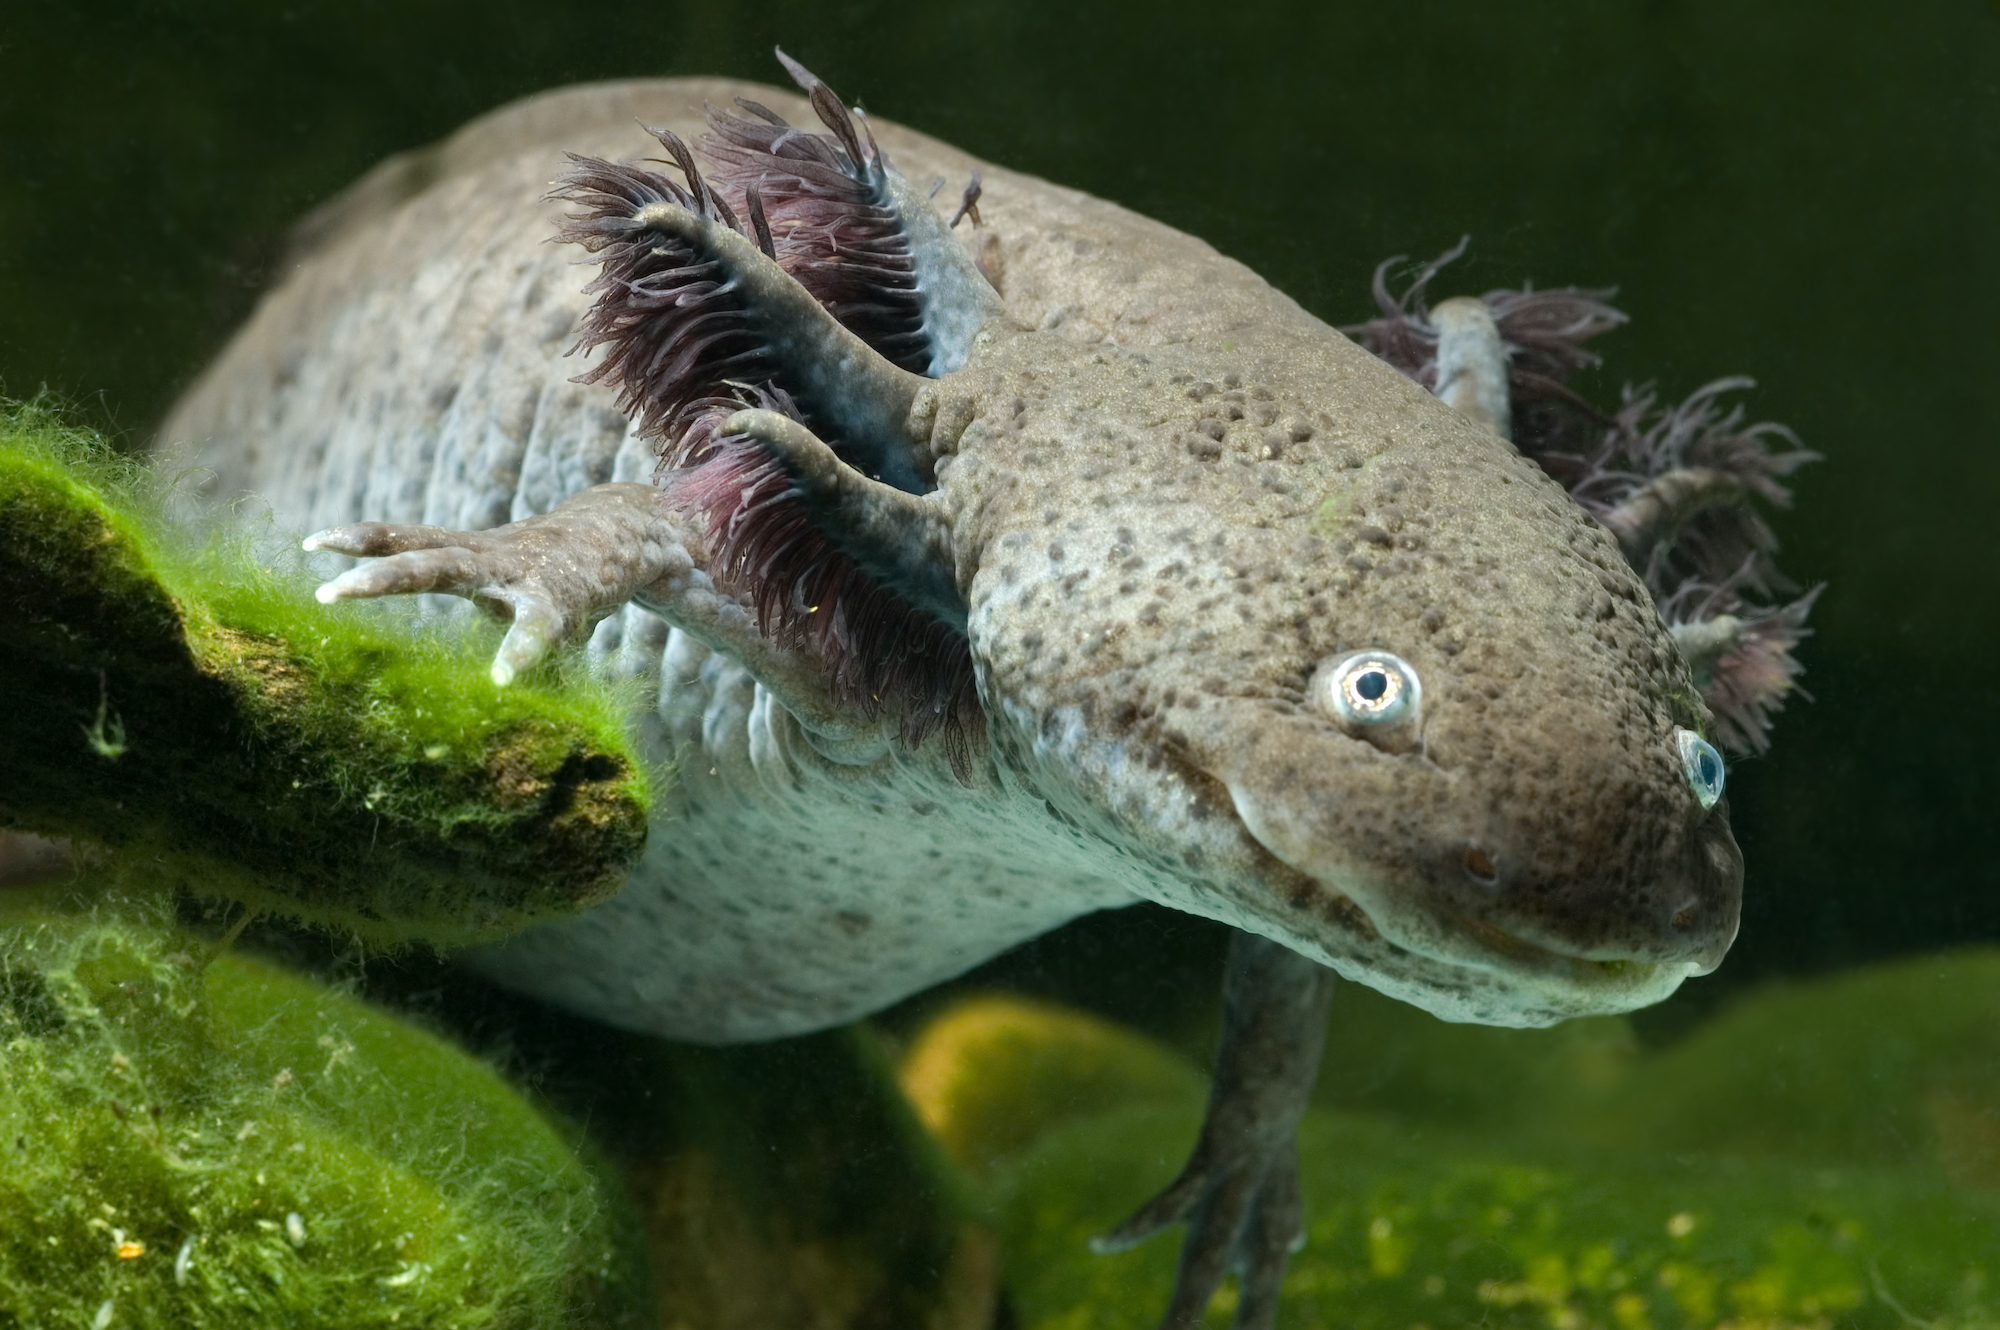 What Do Baby Axolotls Eat? - Feeding Nature